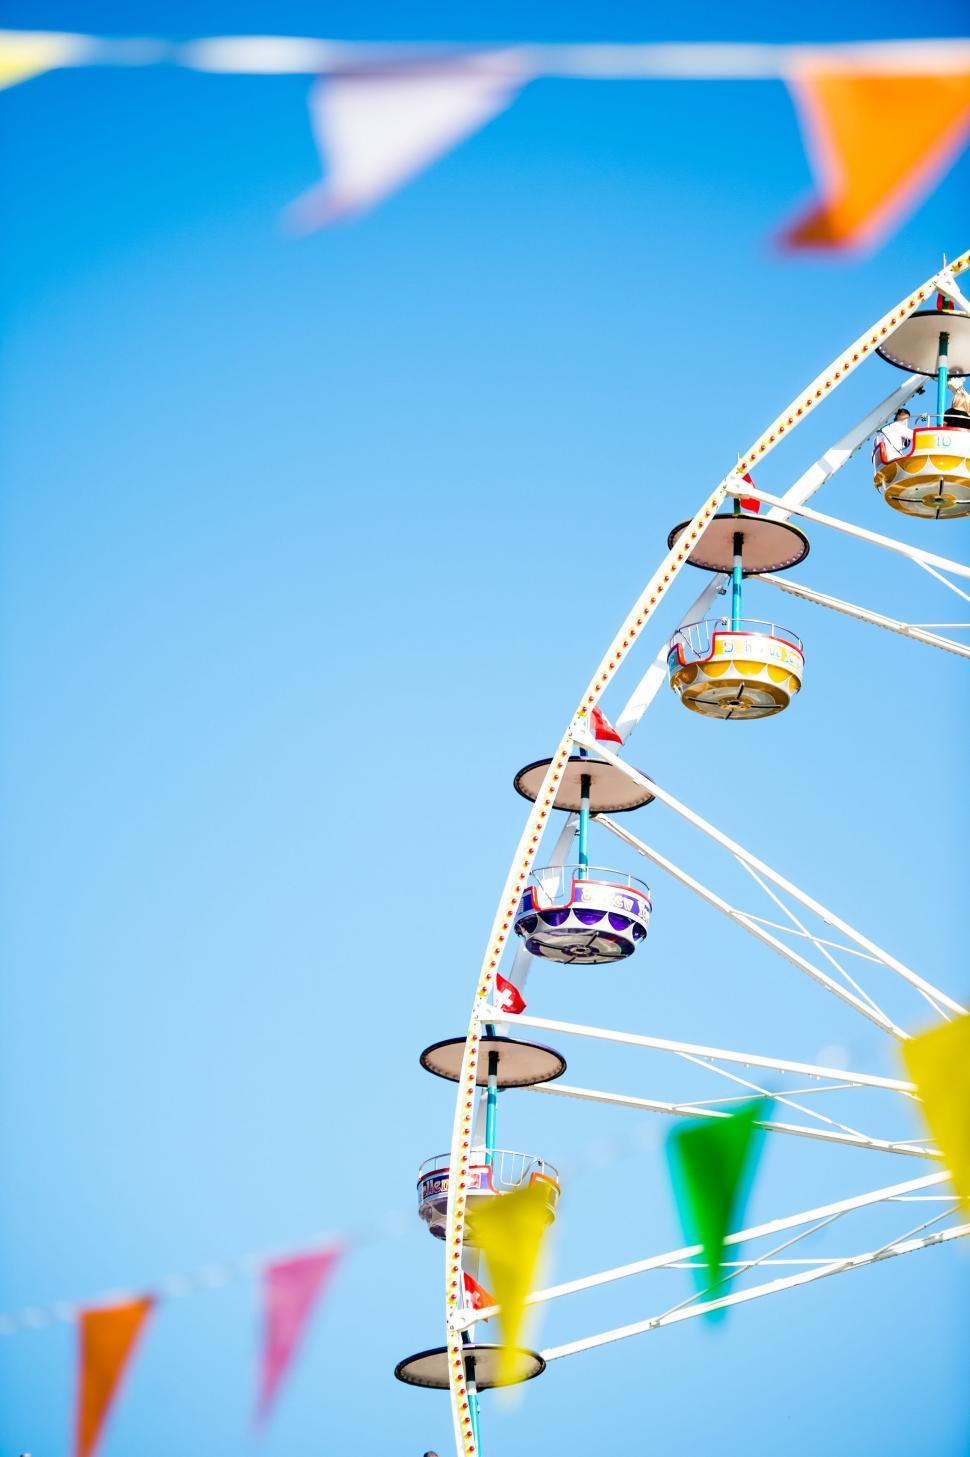 Free Image of Ferris Wheel Against Blue Sky 